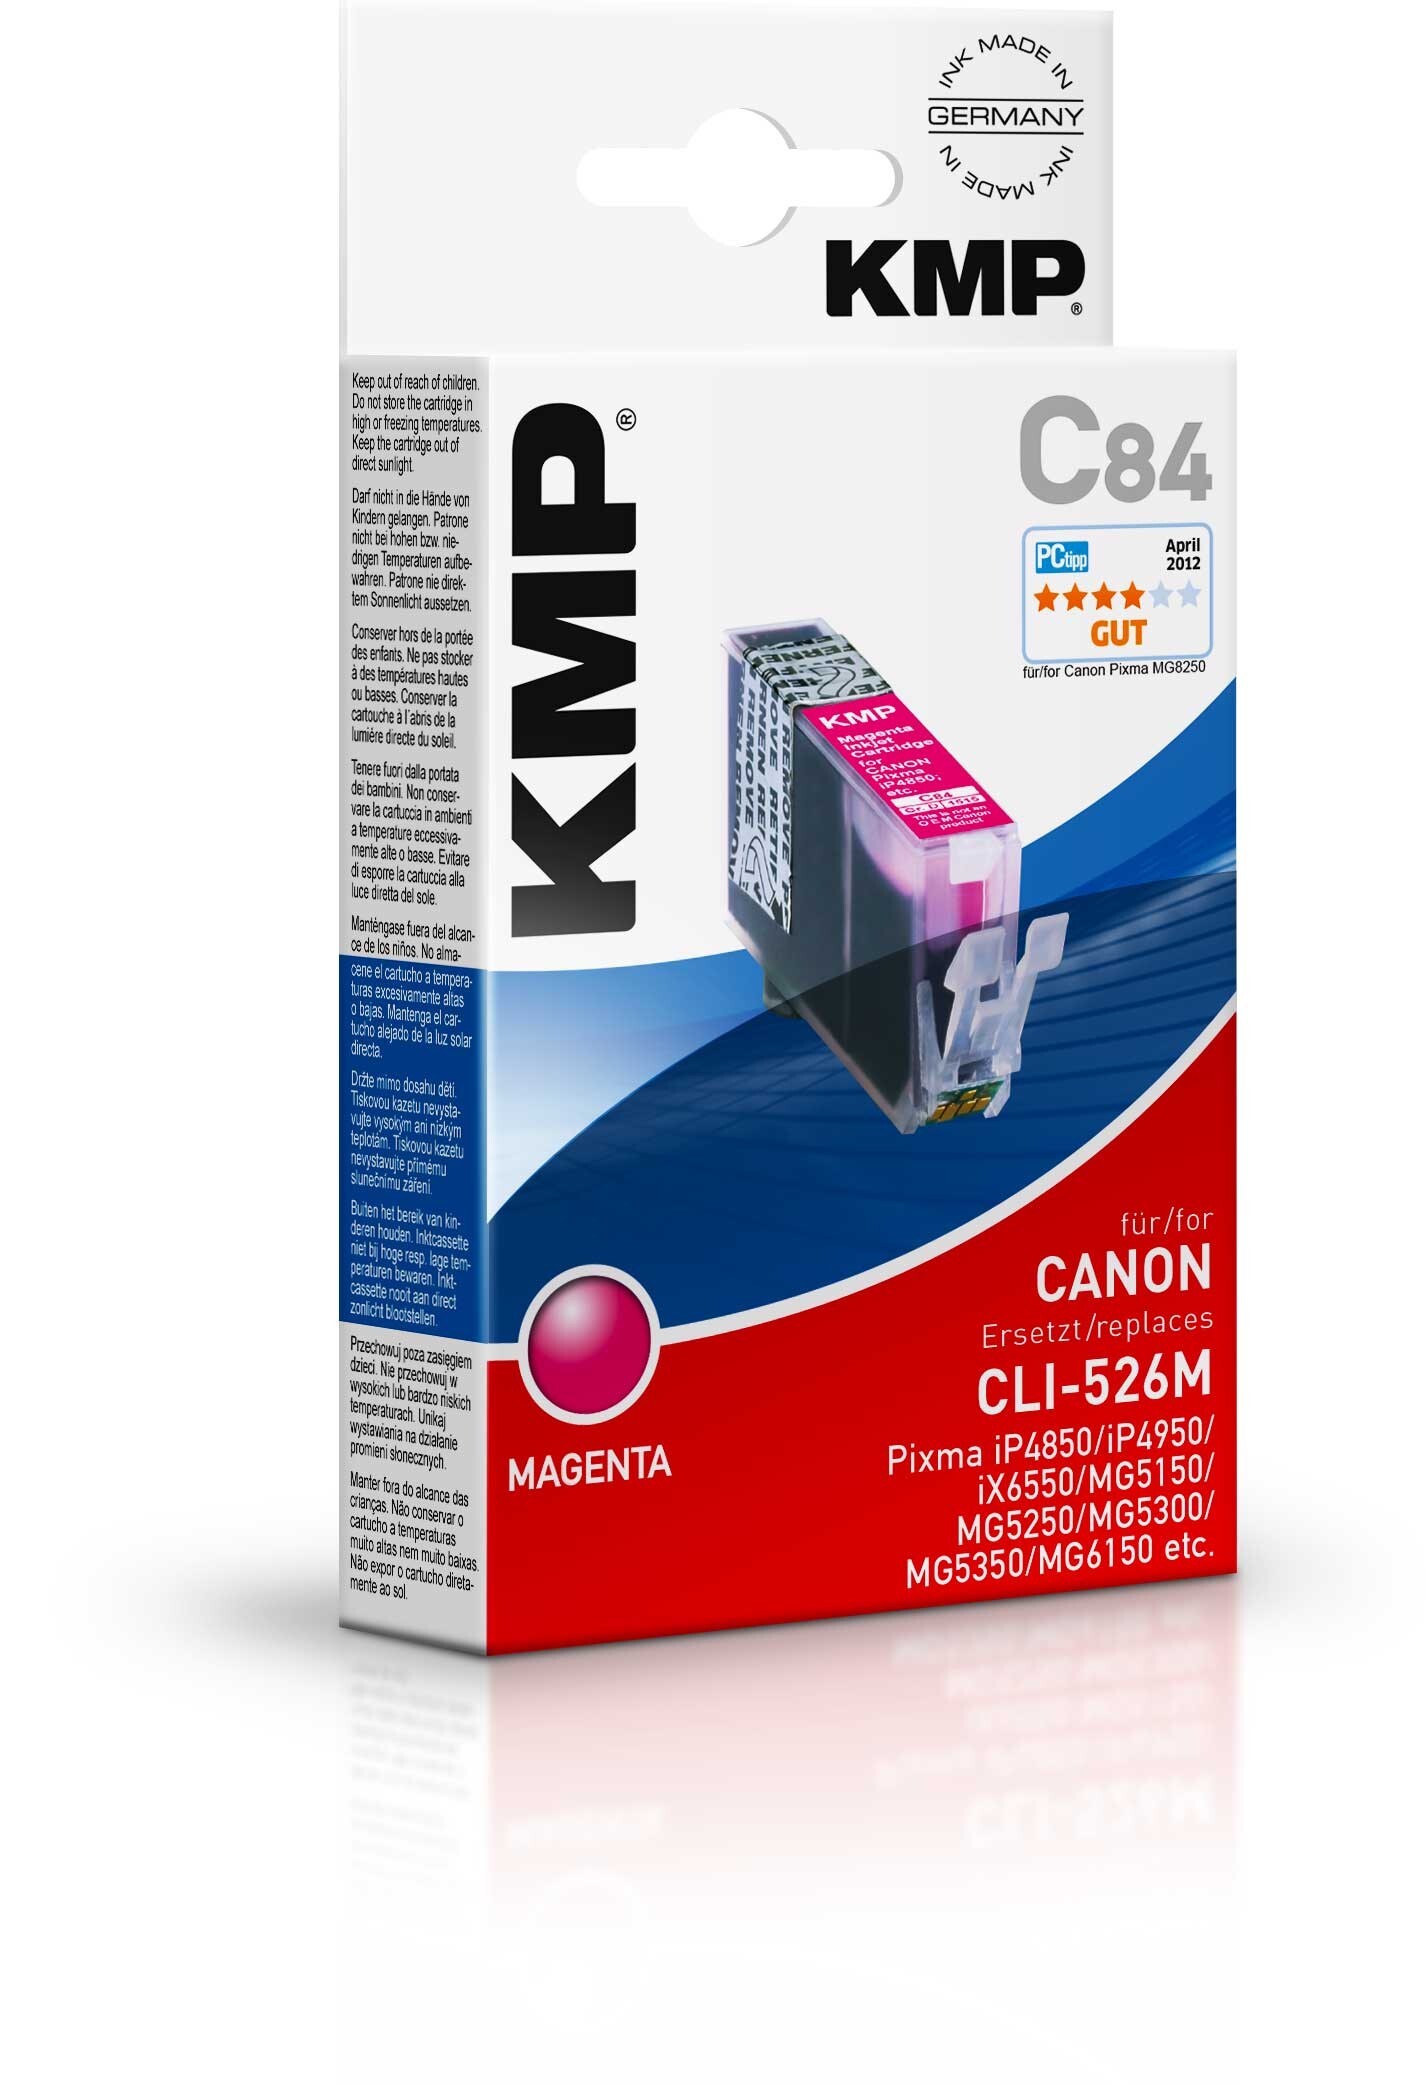 KMP C84 single pack / magenta